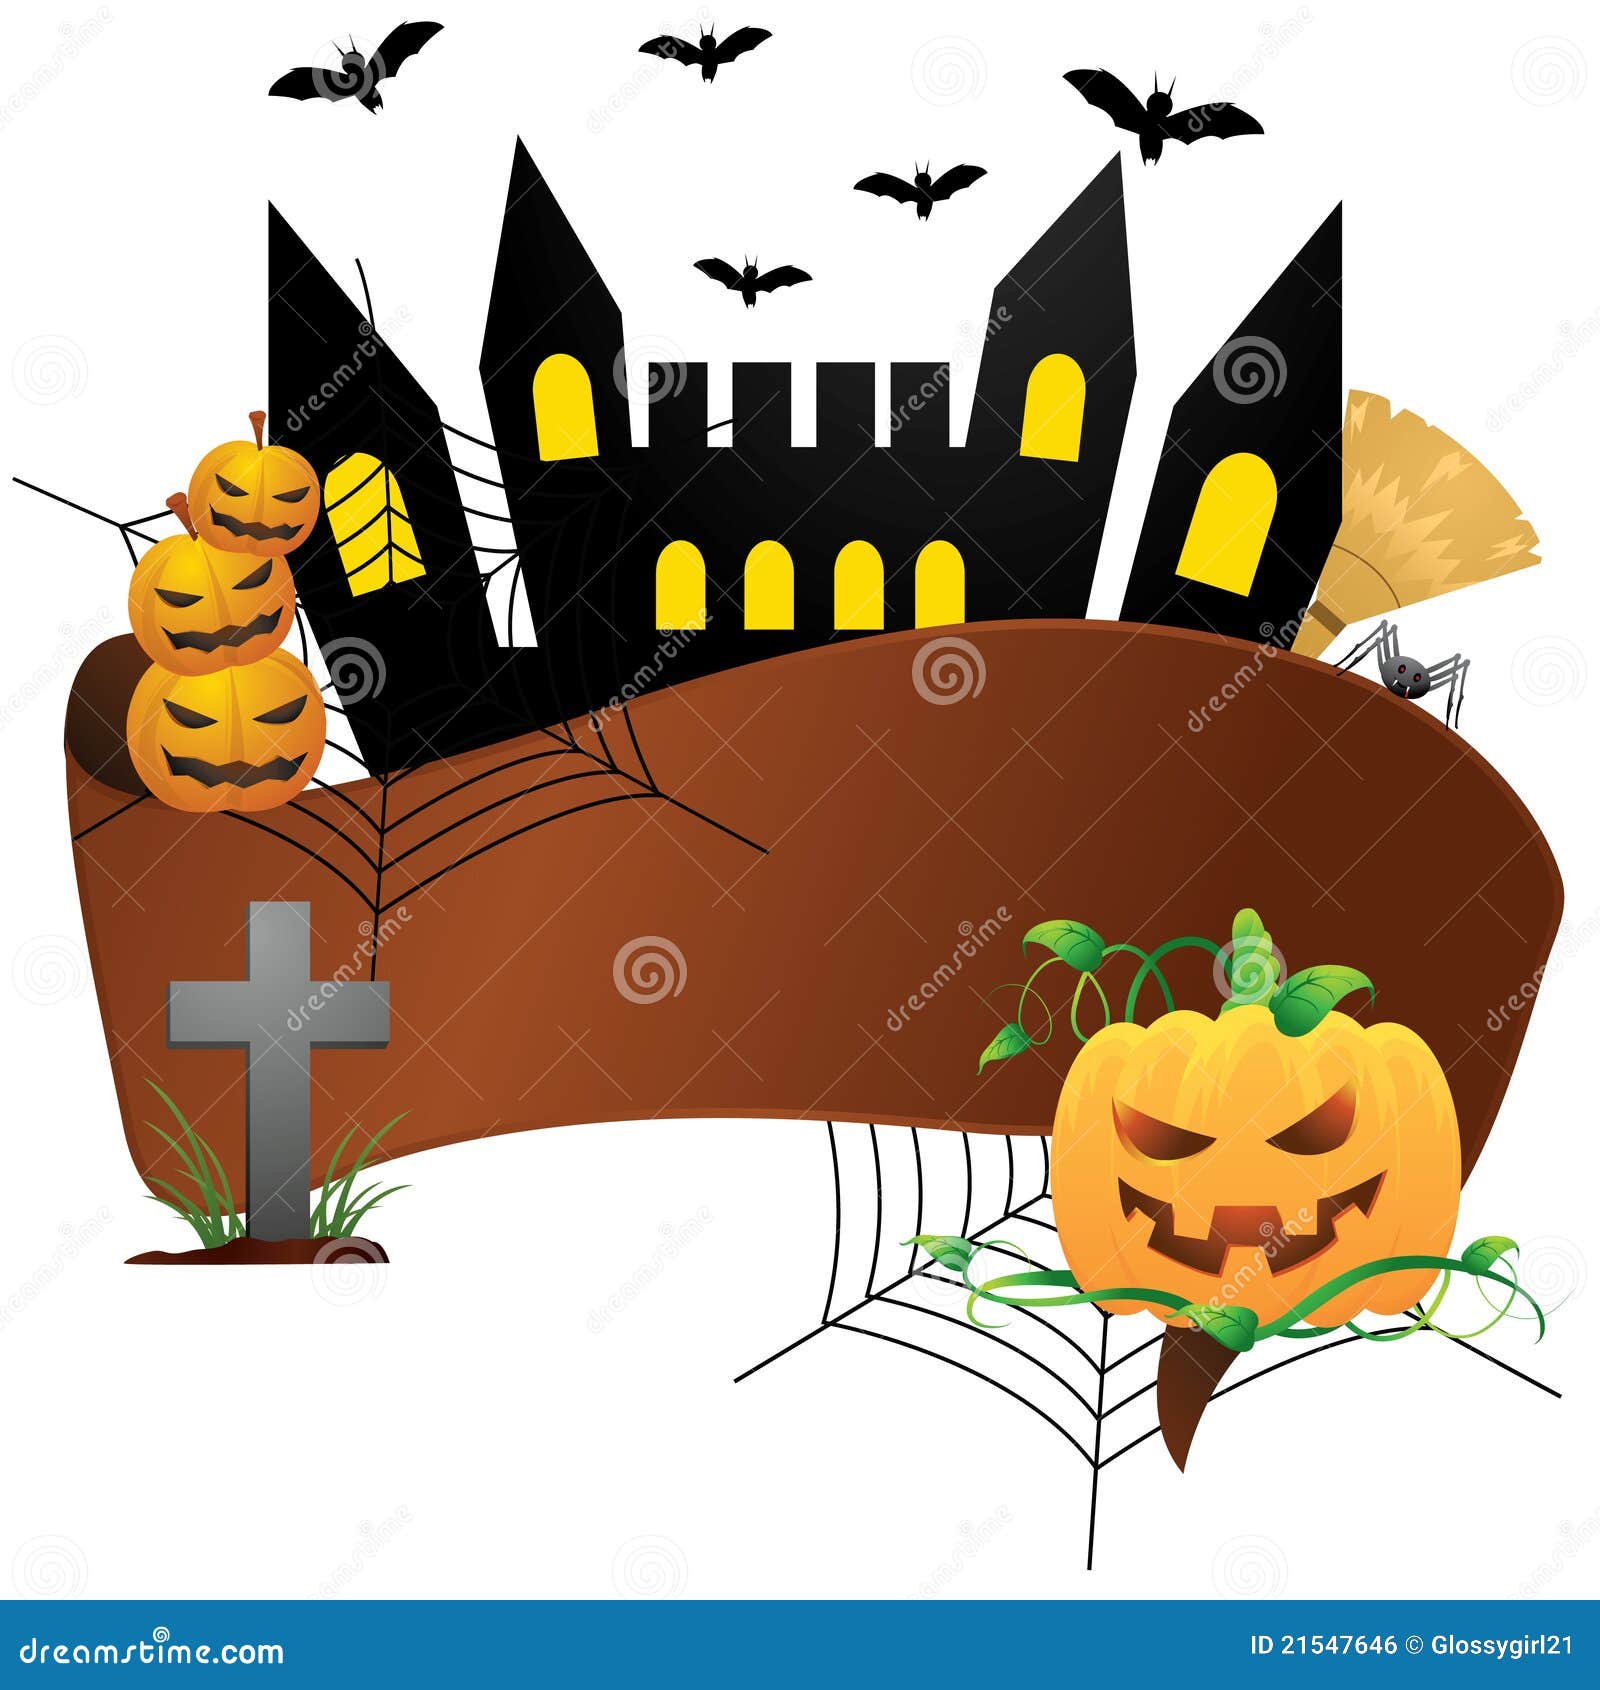 Halloween background stock illustration. Illustration of designs - 21547646